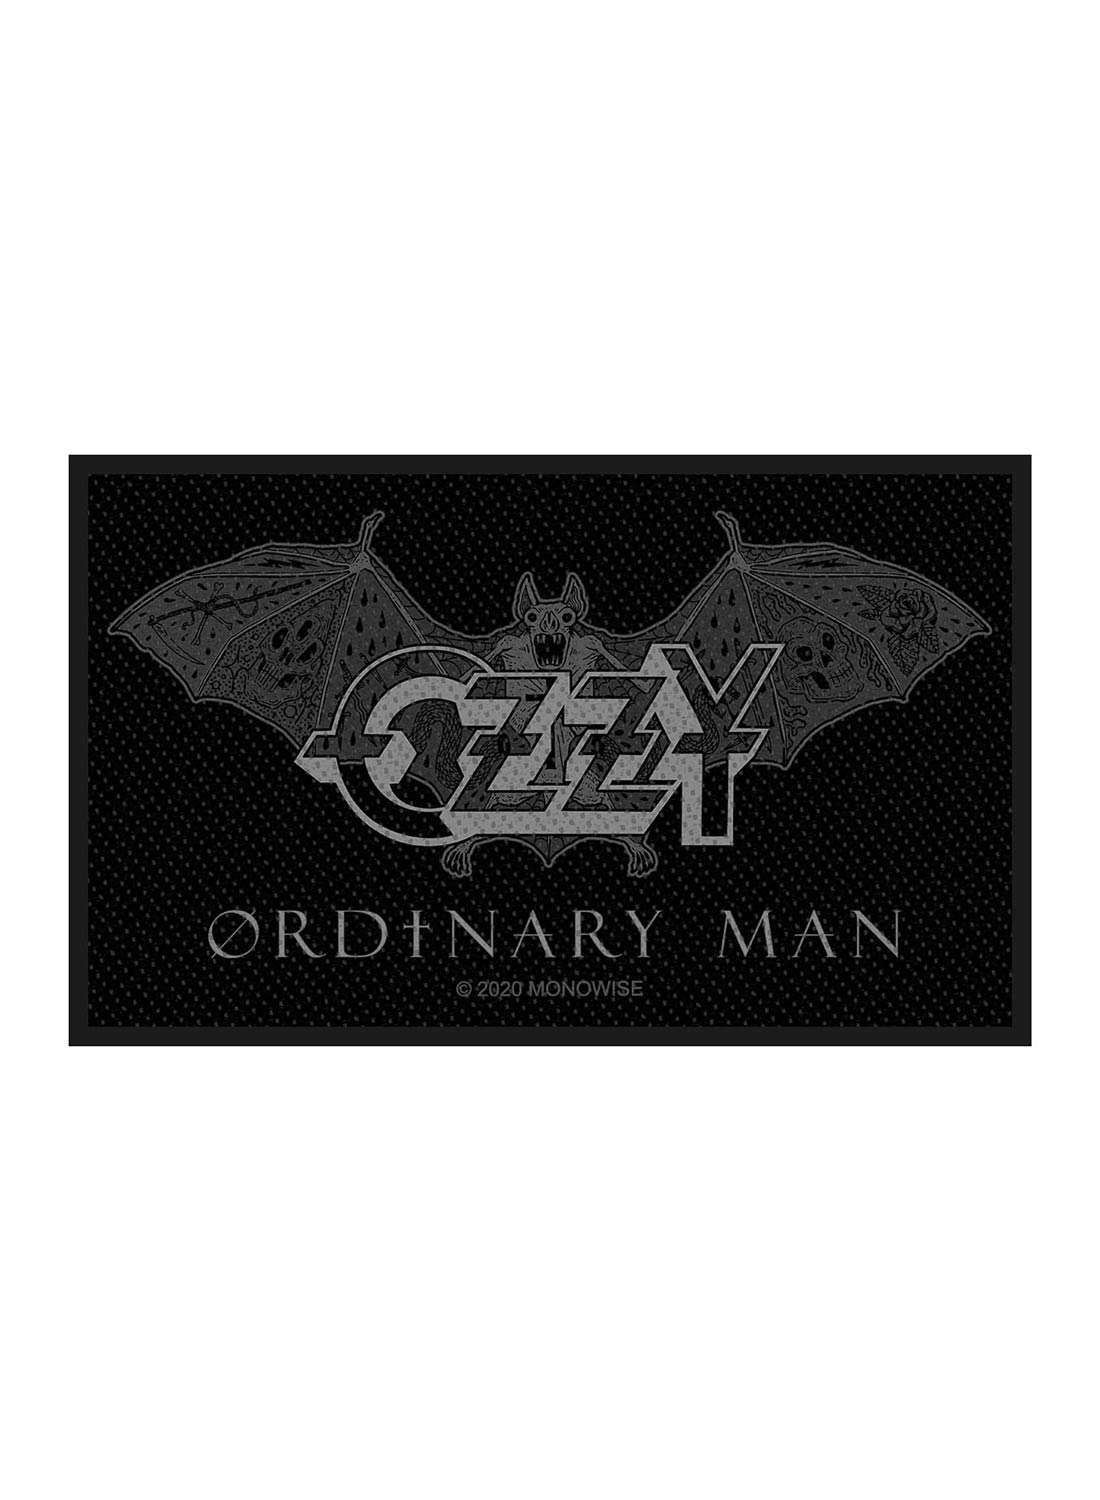 Ozzy Osbourne Ordinary Man Patch